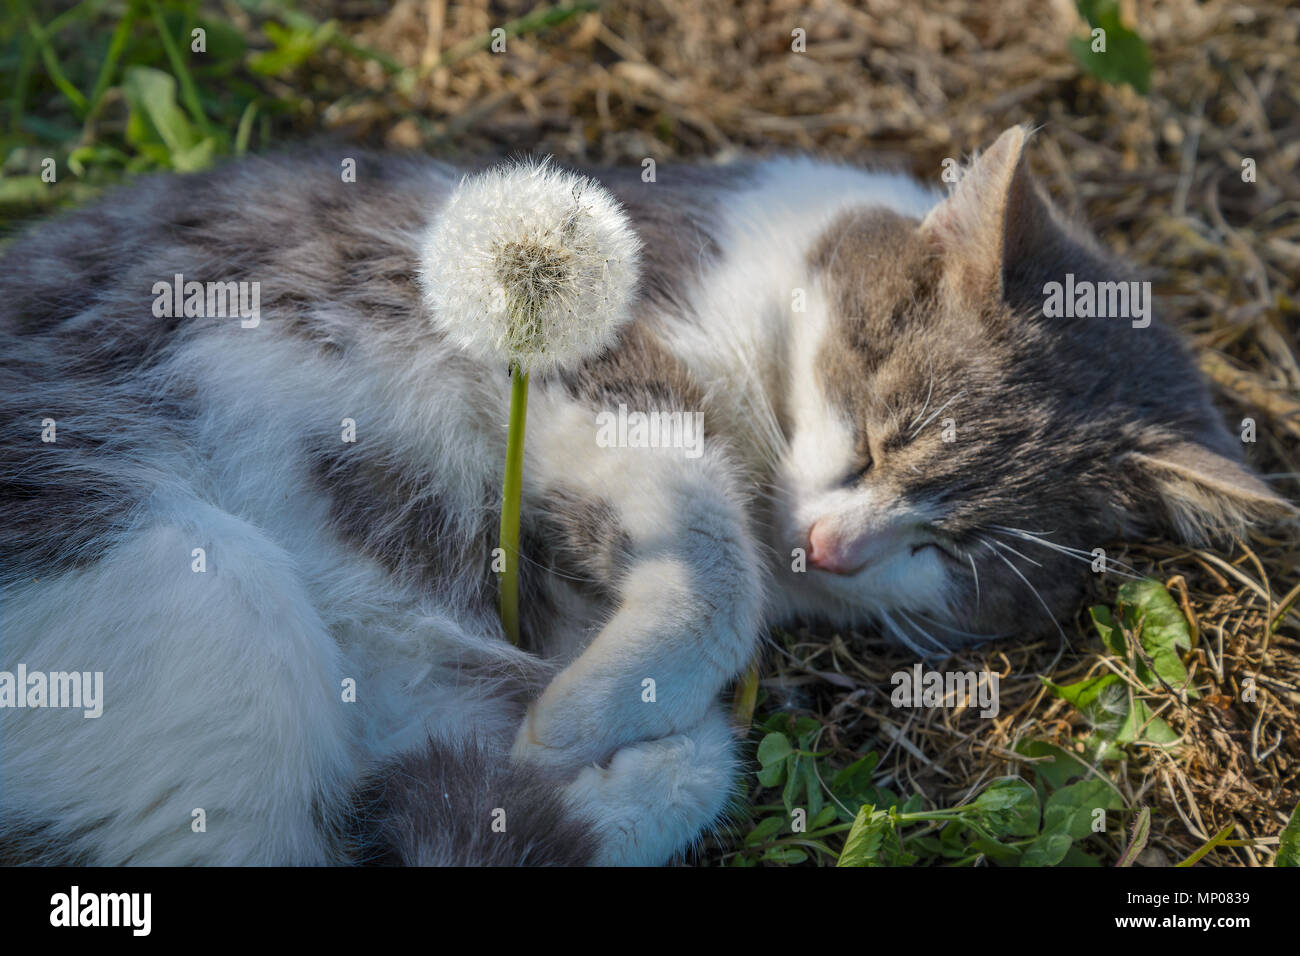 The gray cat sleeps embracing a dandelion Stock Photo